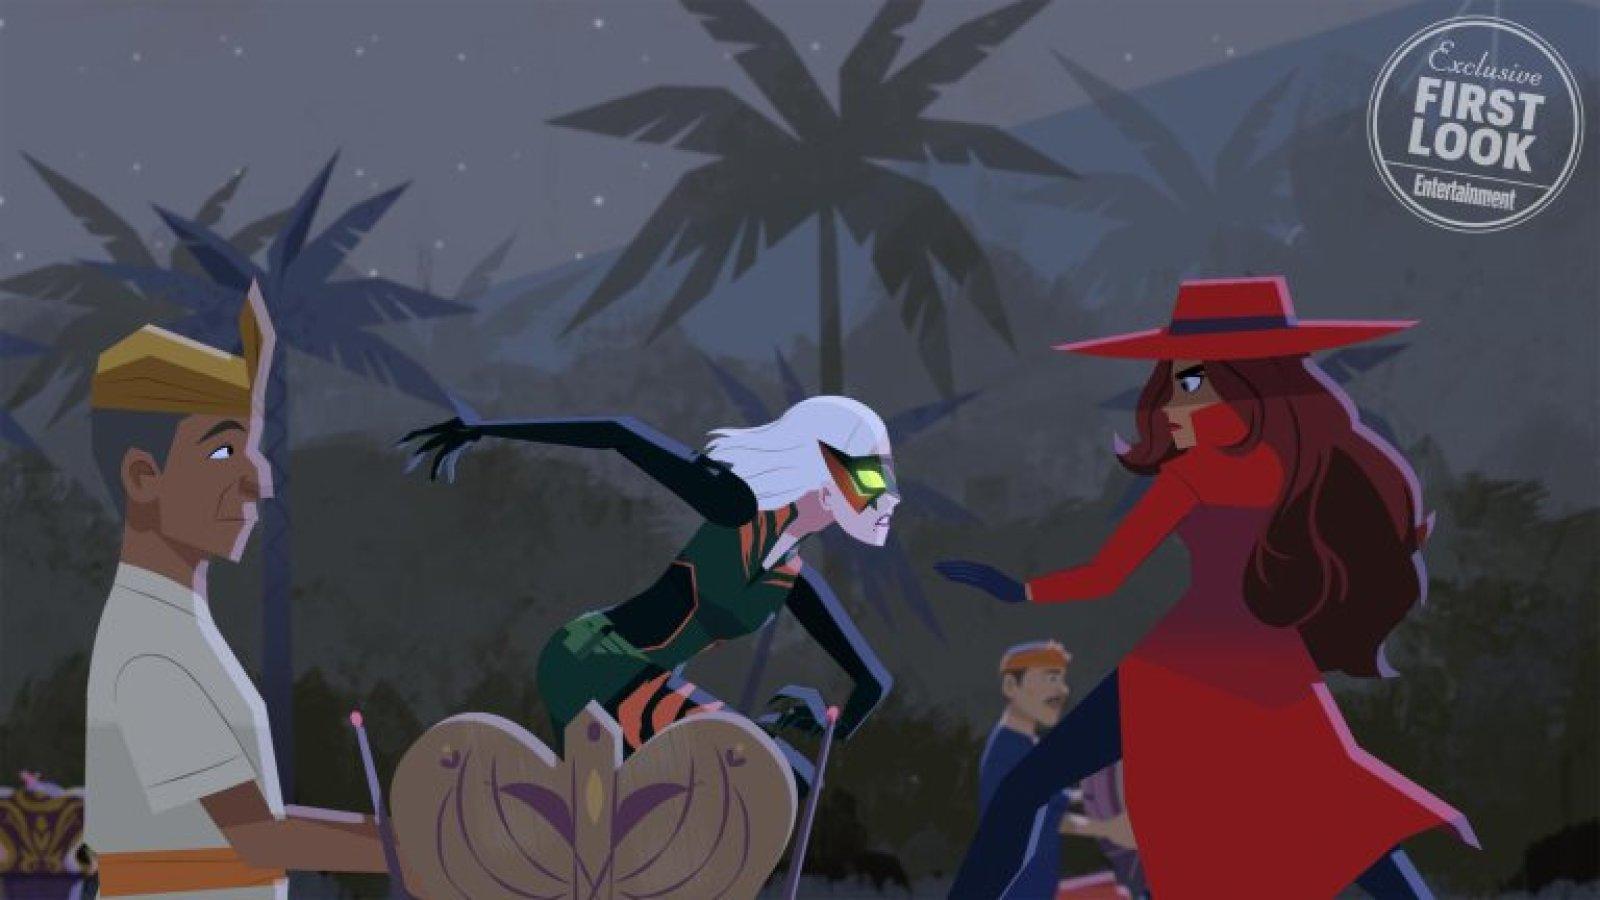 Netflix's 'Carmen Sandiego' debuts on January 19th, 2019